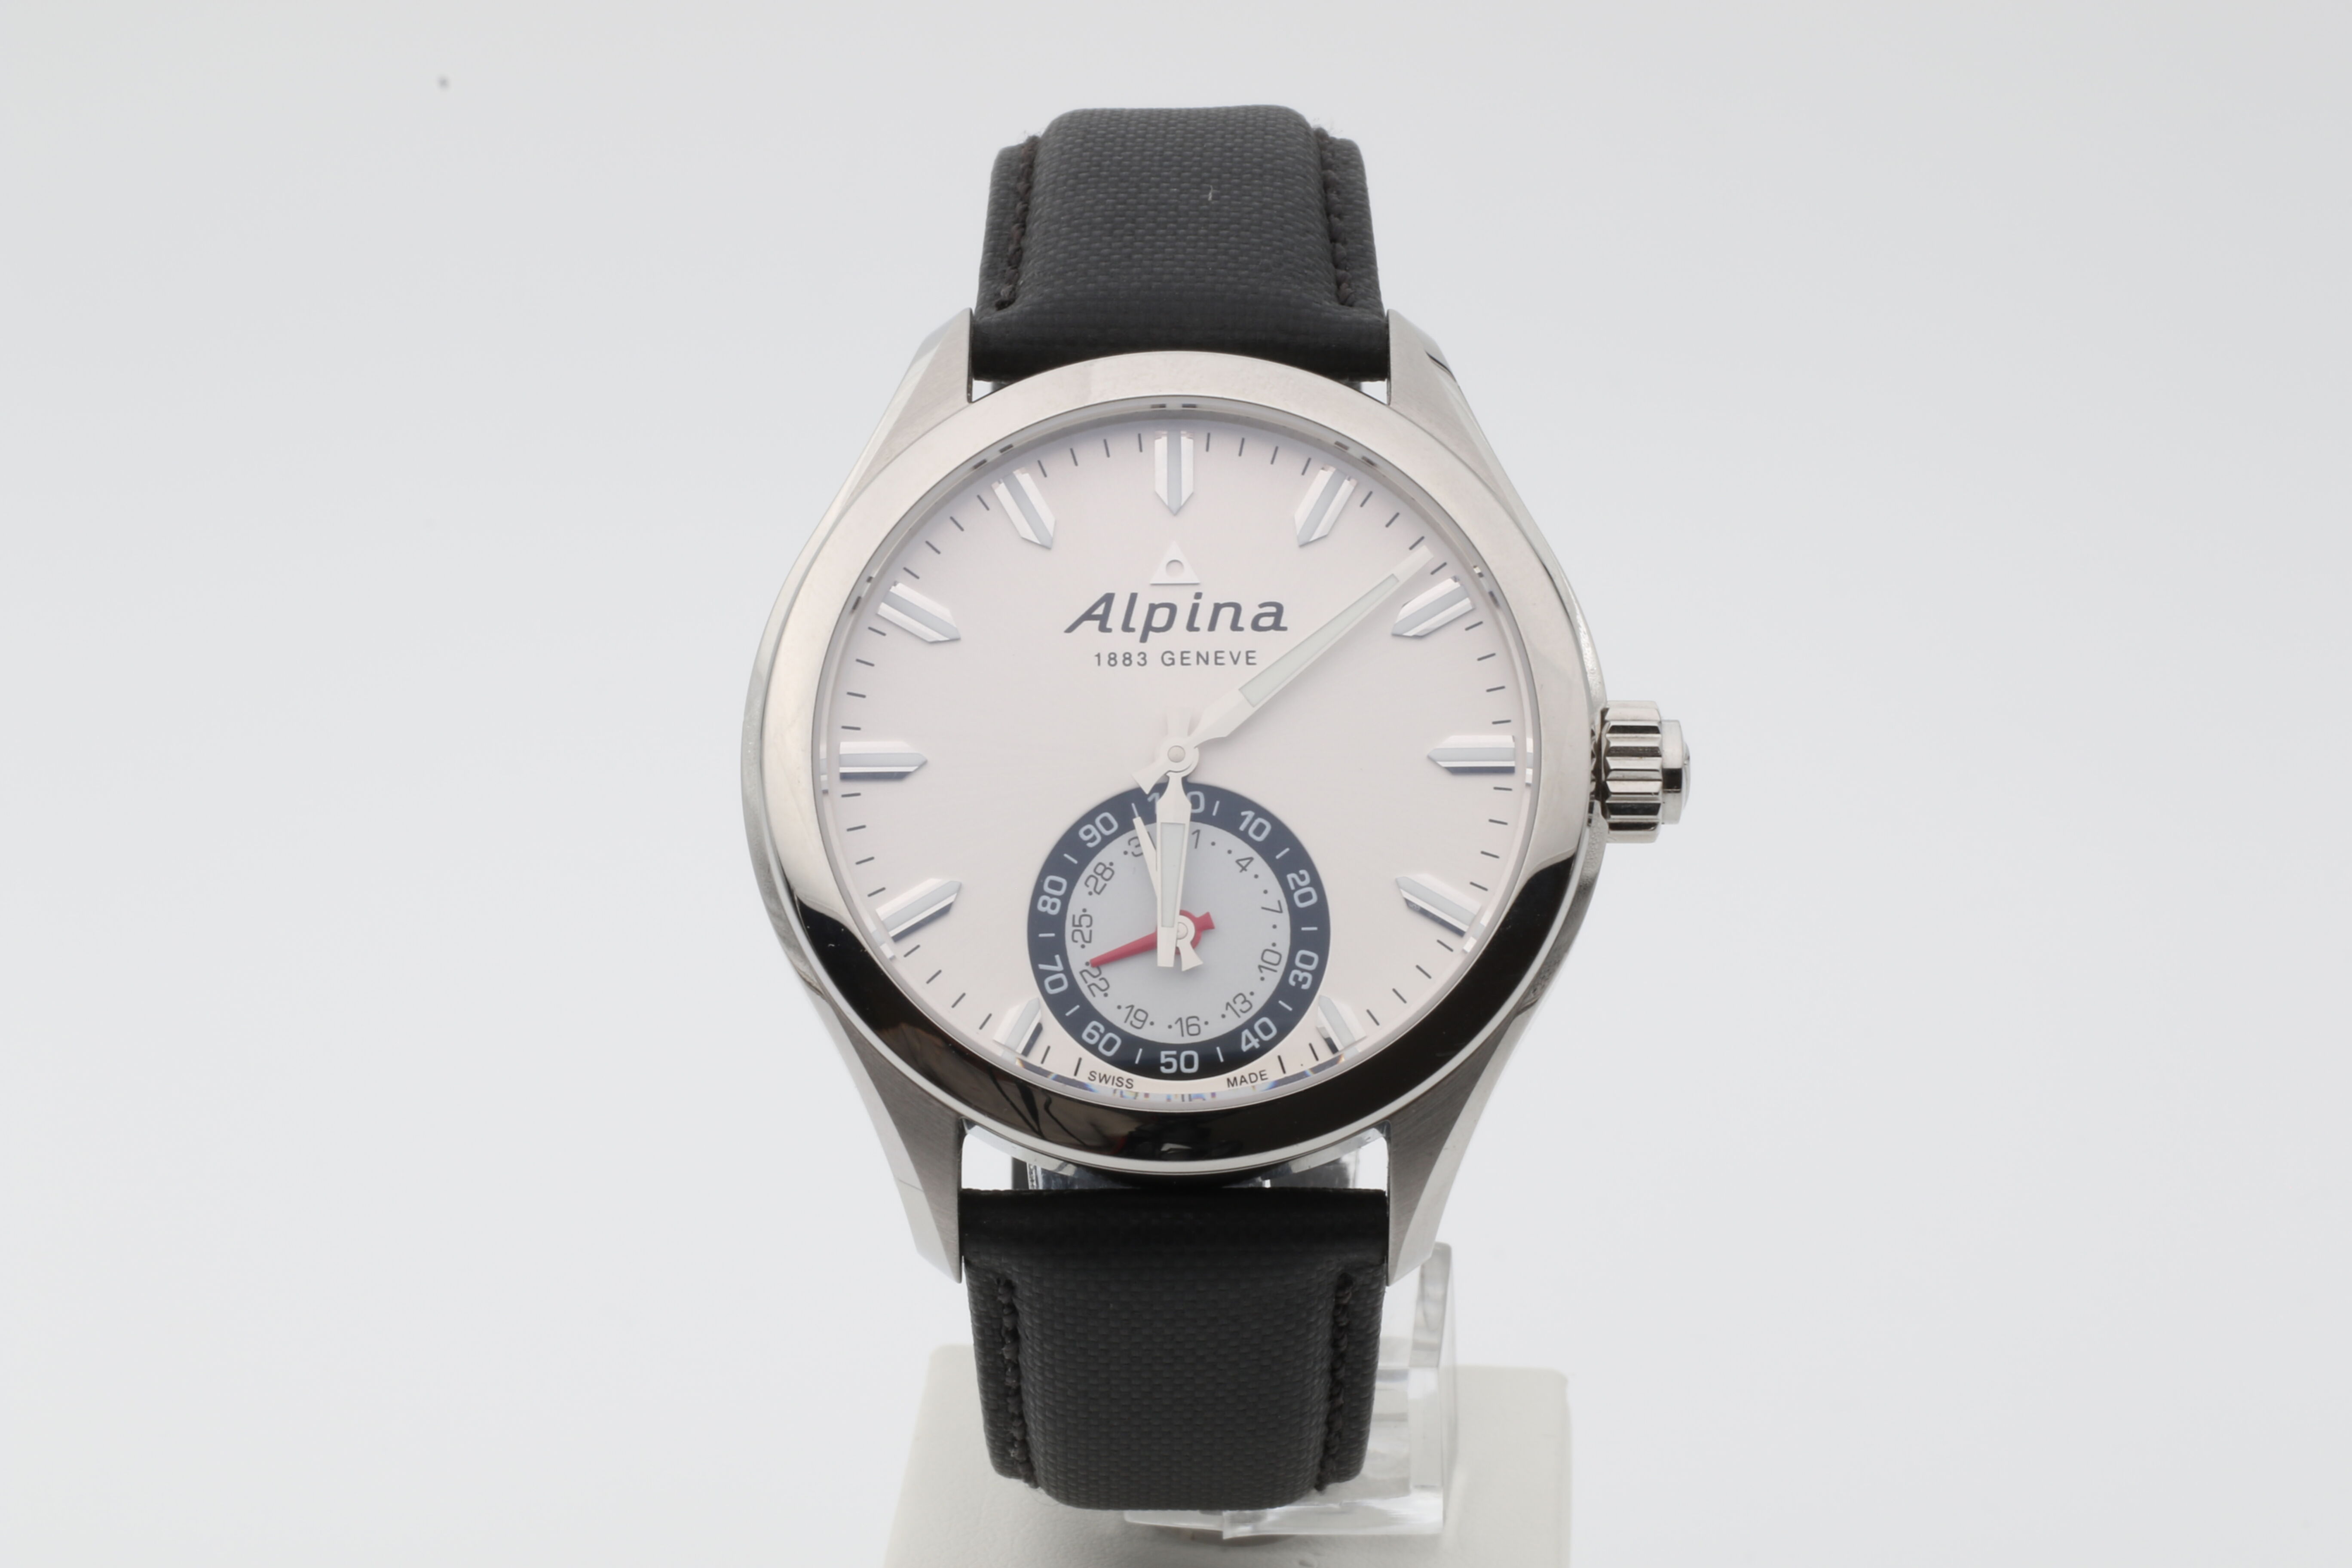 Alpina Horological Smartwatch AL-285S5AQ6